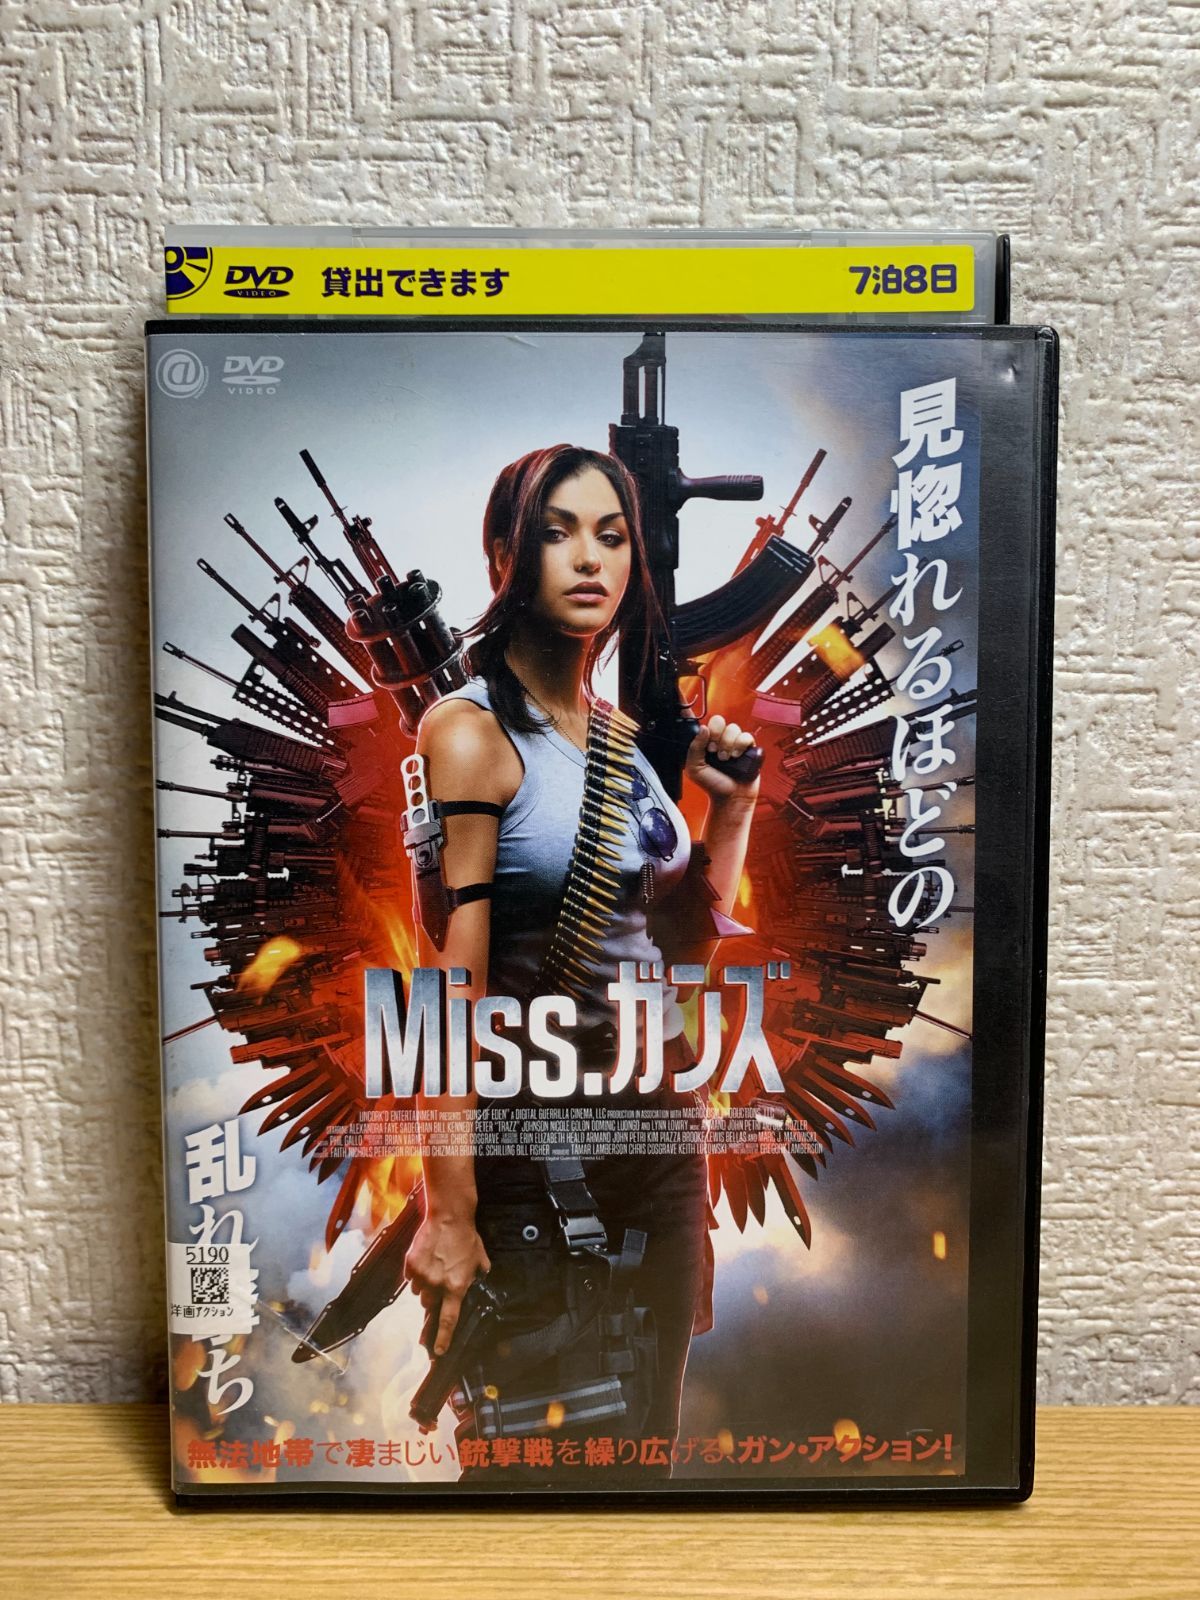 Miss.ガンズ DVD